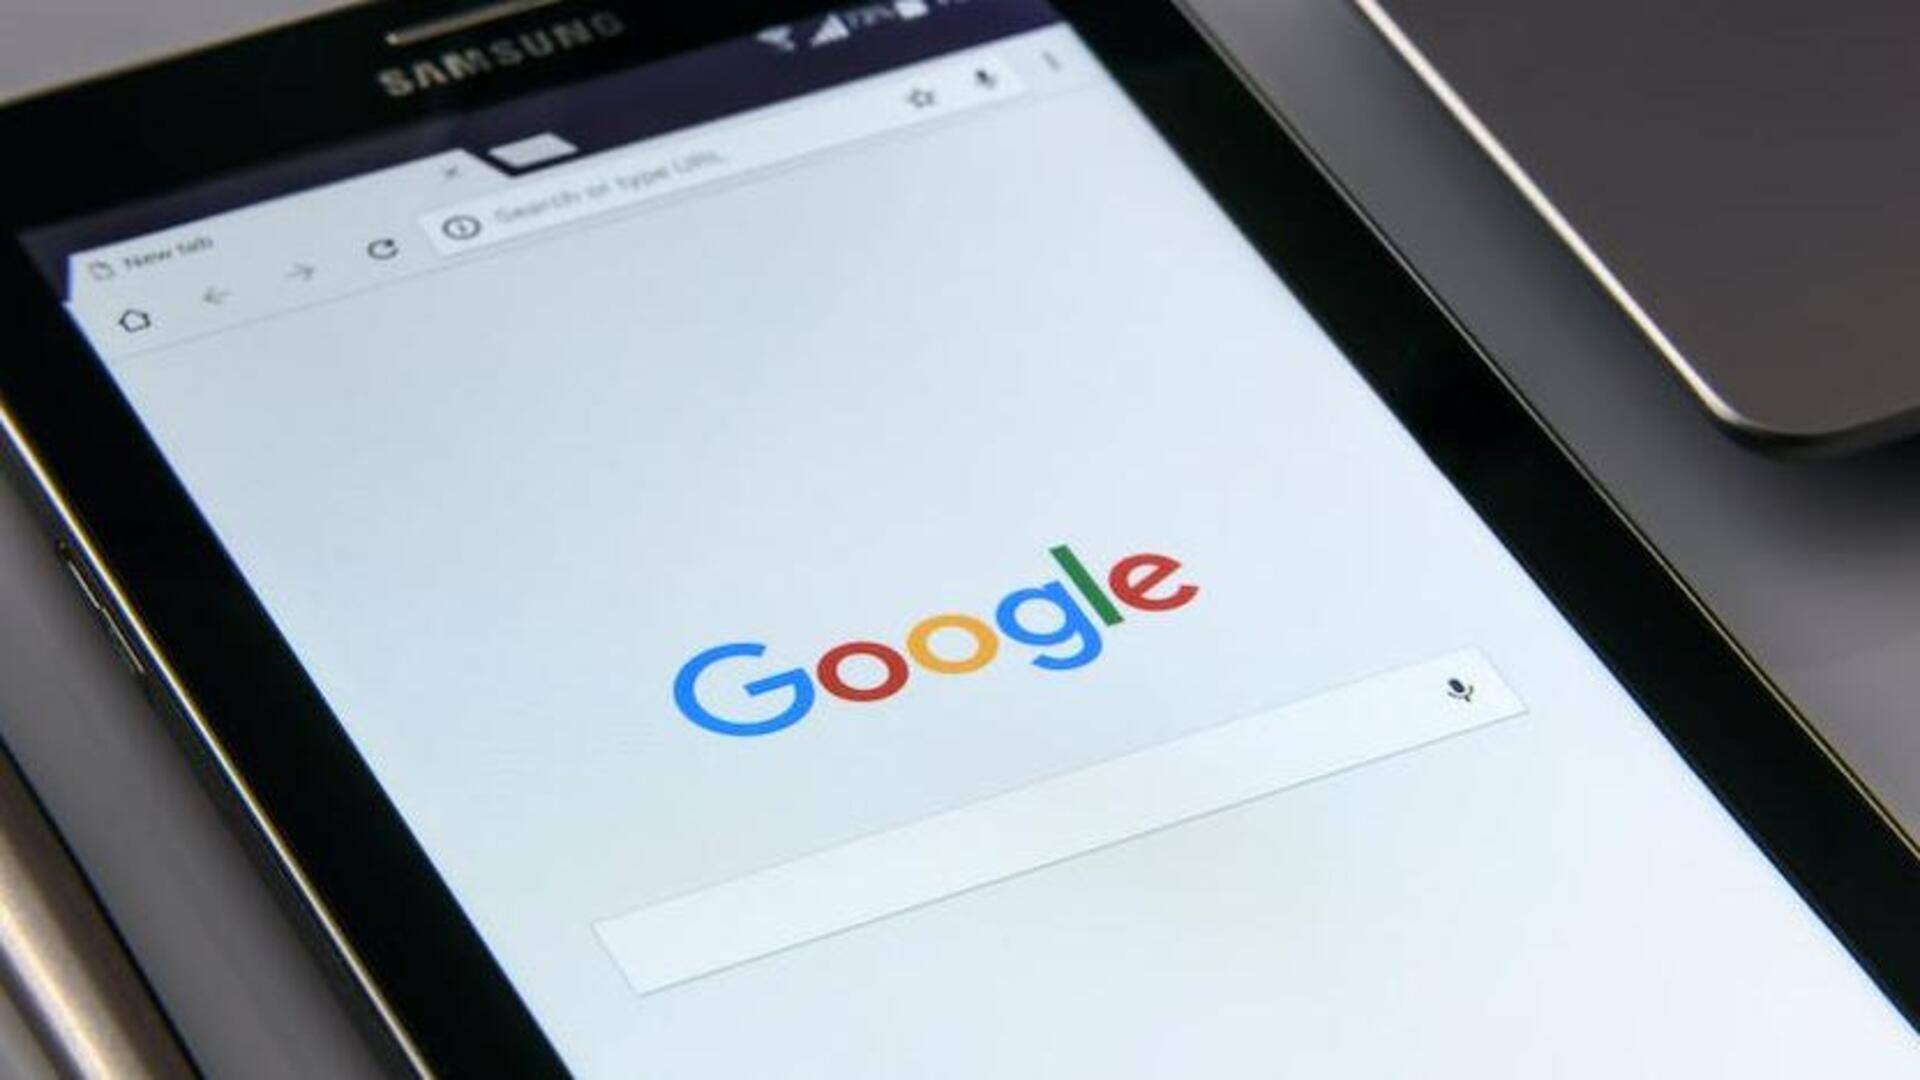 Google's landmark antitrust trial in US: What's at stake